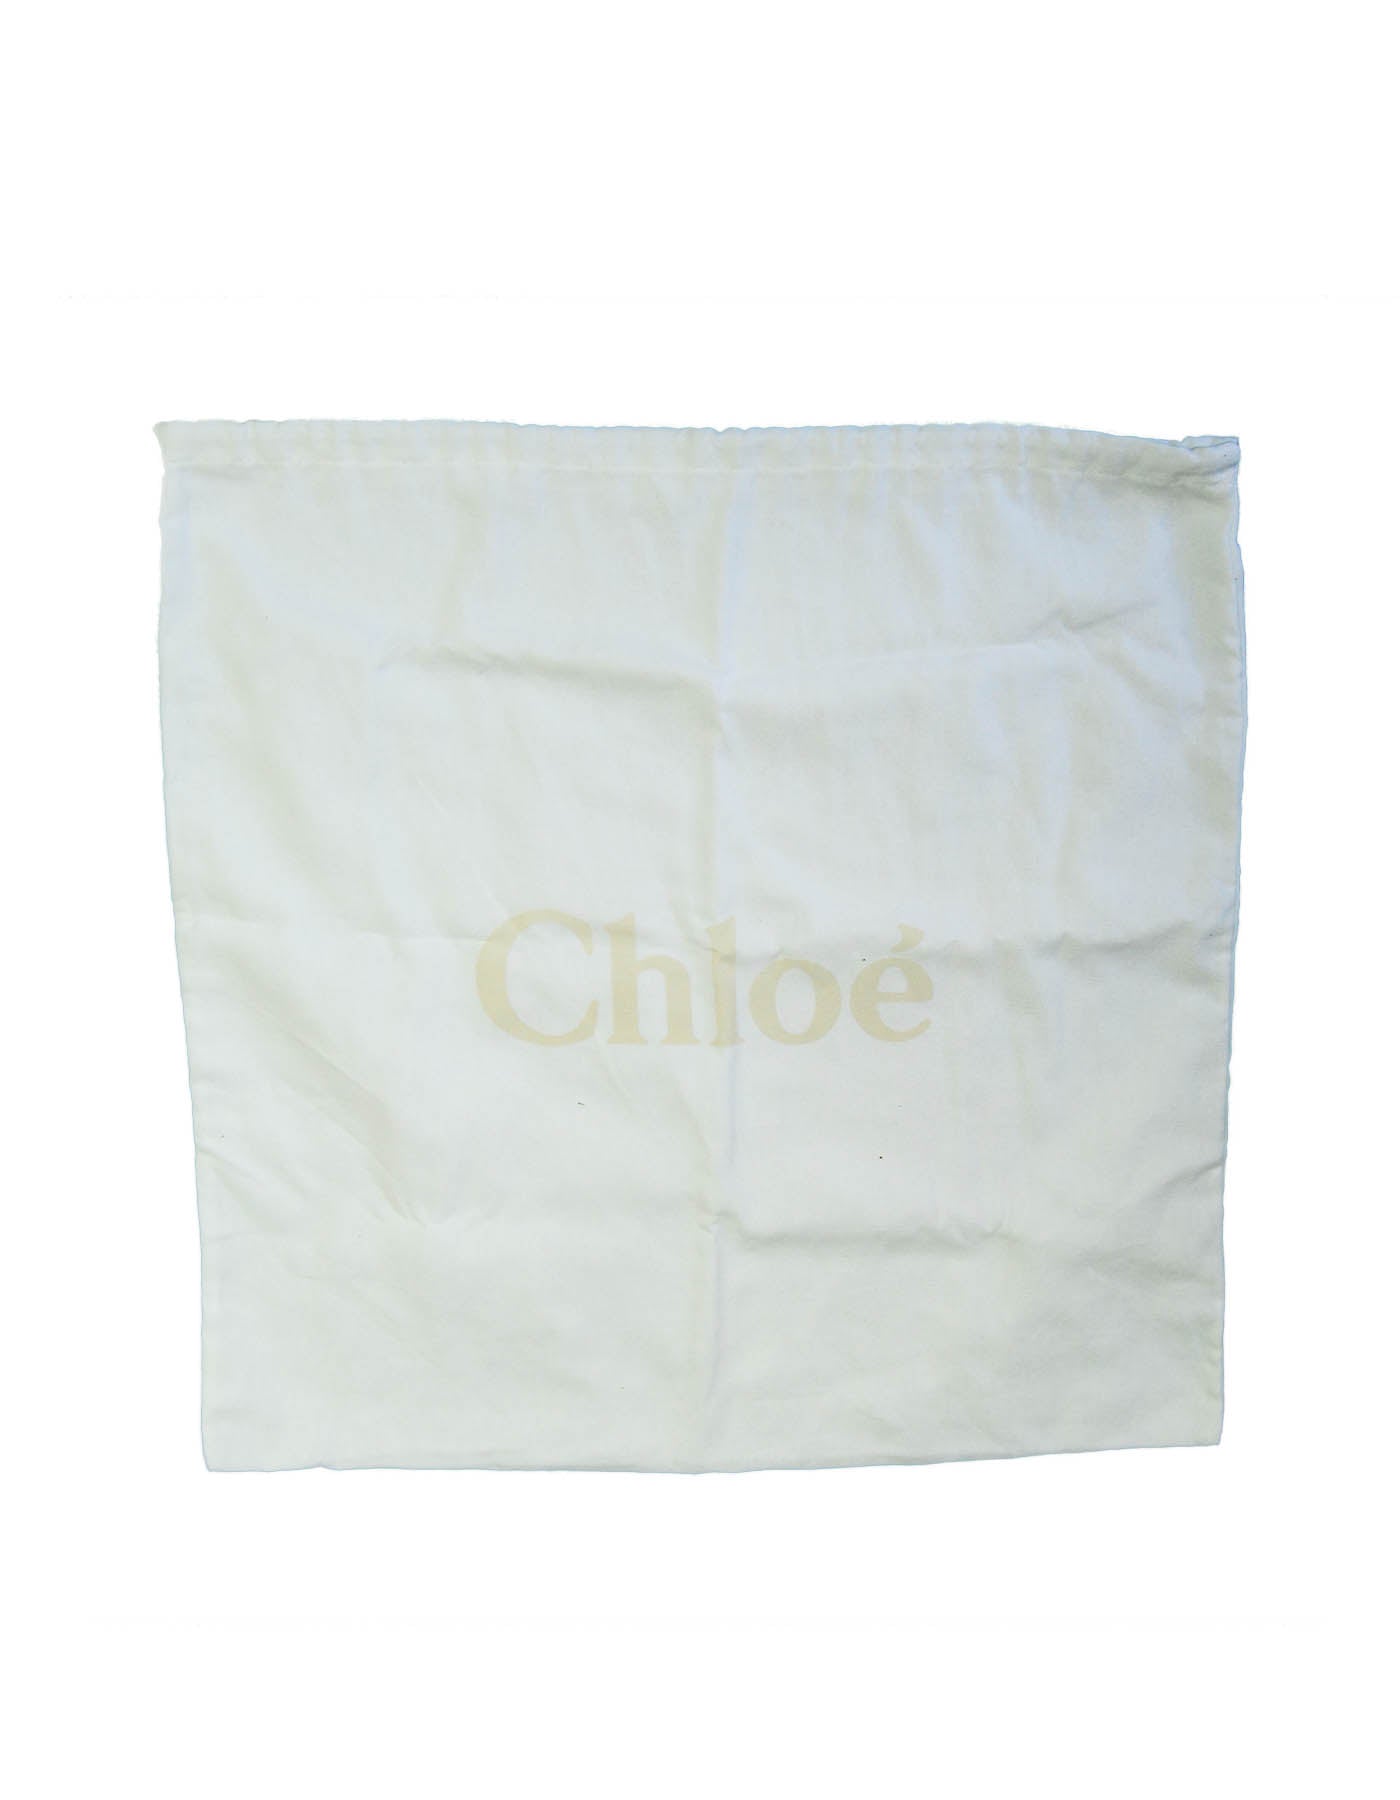 Chloe Black Leather Large Marcie Bag